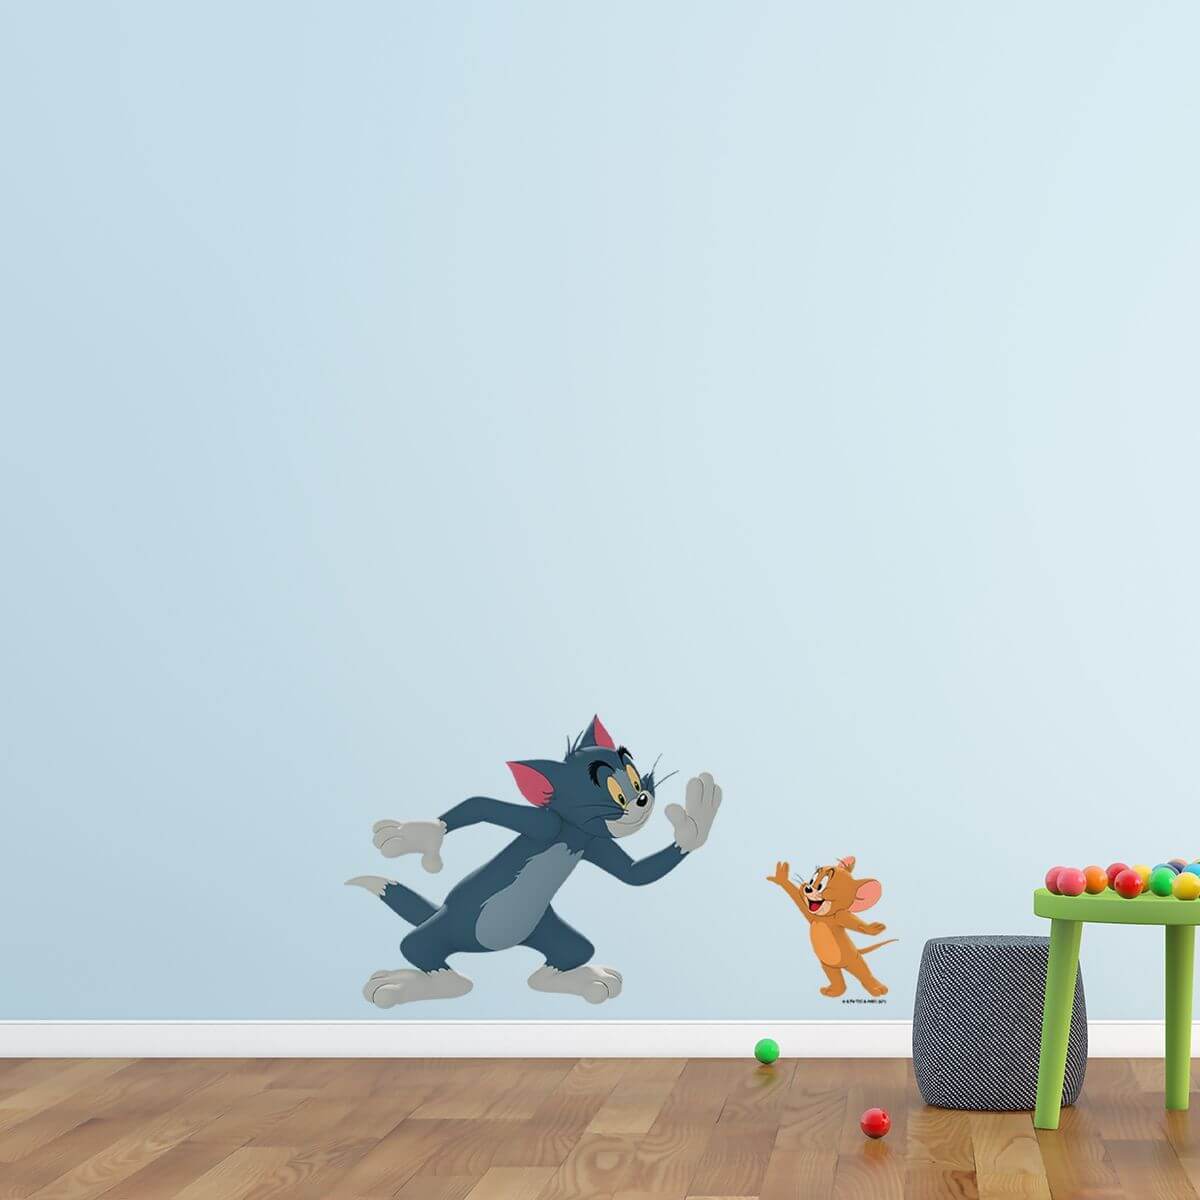 Kismet Decals Tom & Jerry: High Five! Licensed Wall Sticker - Easy DIY Home & Room Decor Cartoon Wall Art - Kismet Decals